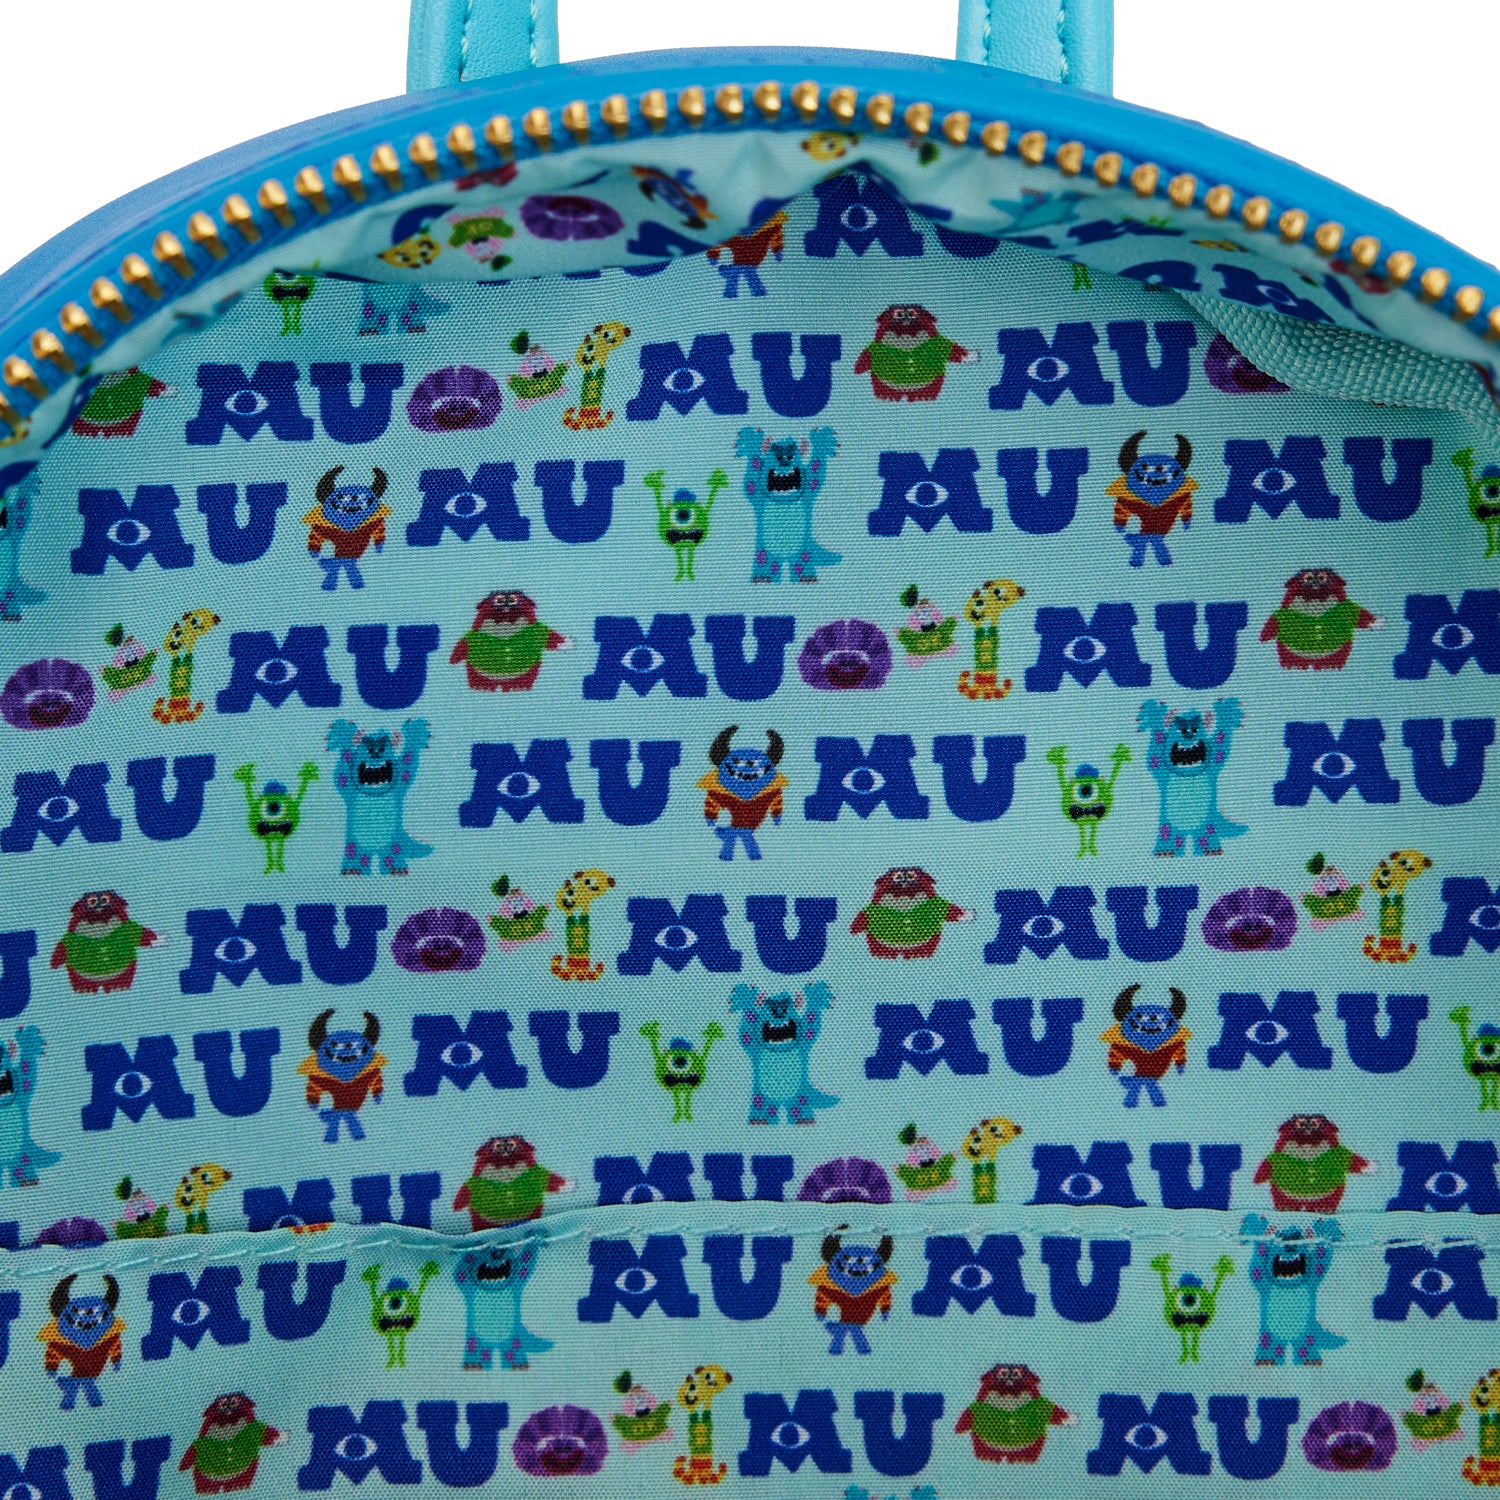 Monsters University Official Backpacks for Sale - Pixar Post